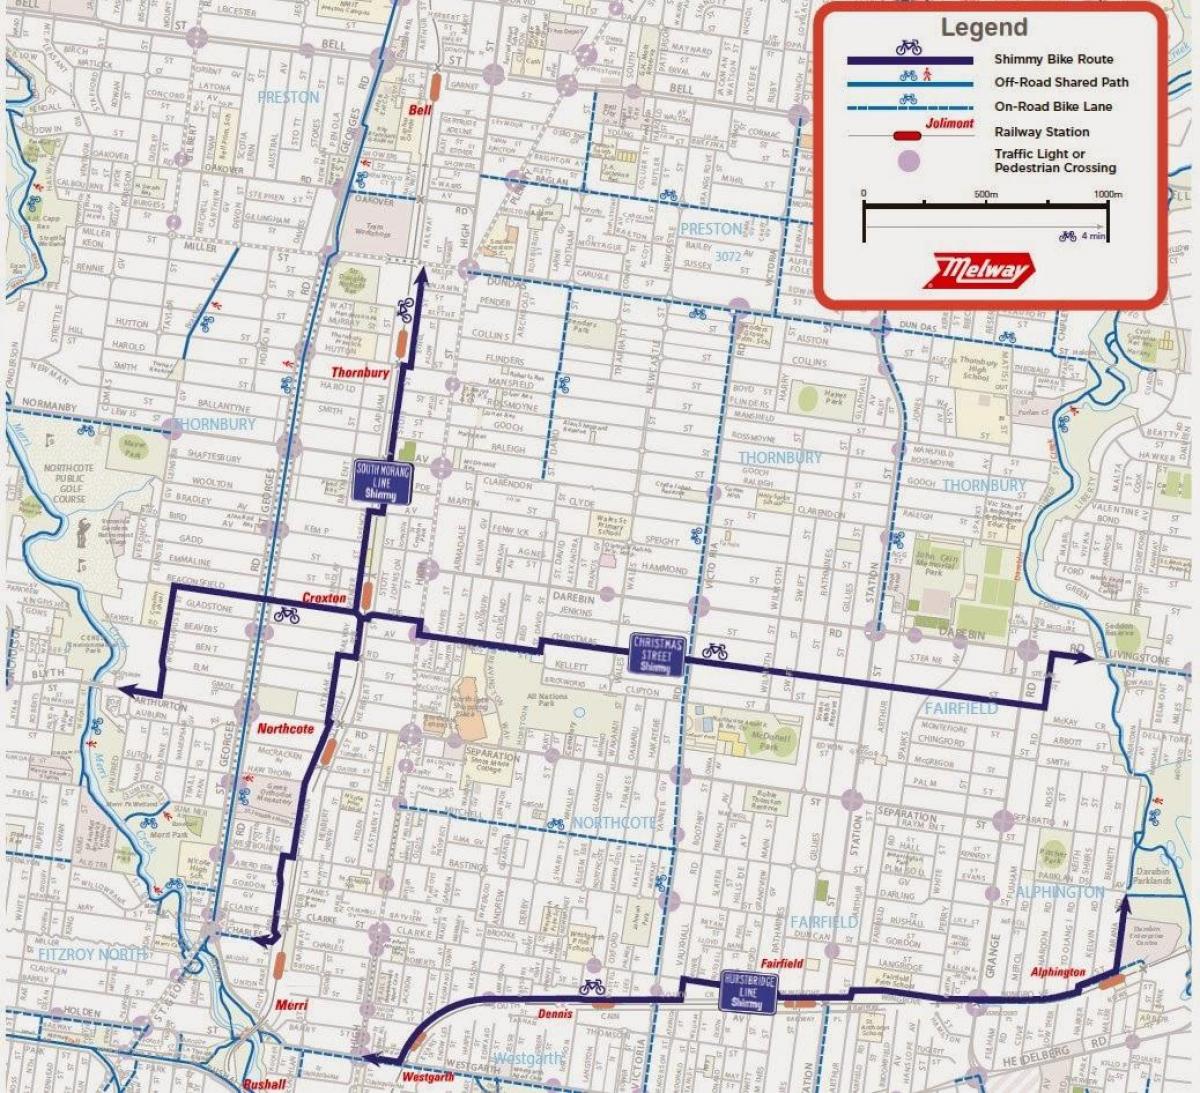 Melbourne bike share haritası